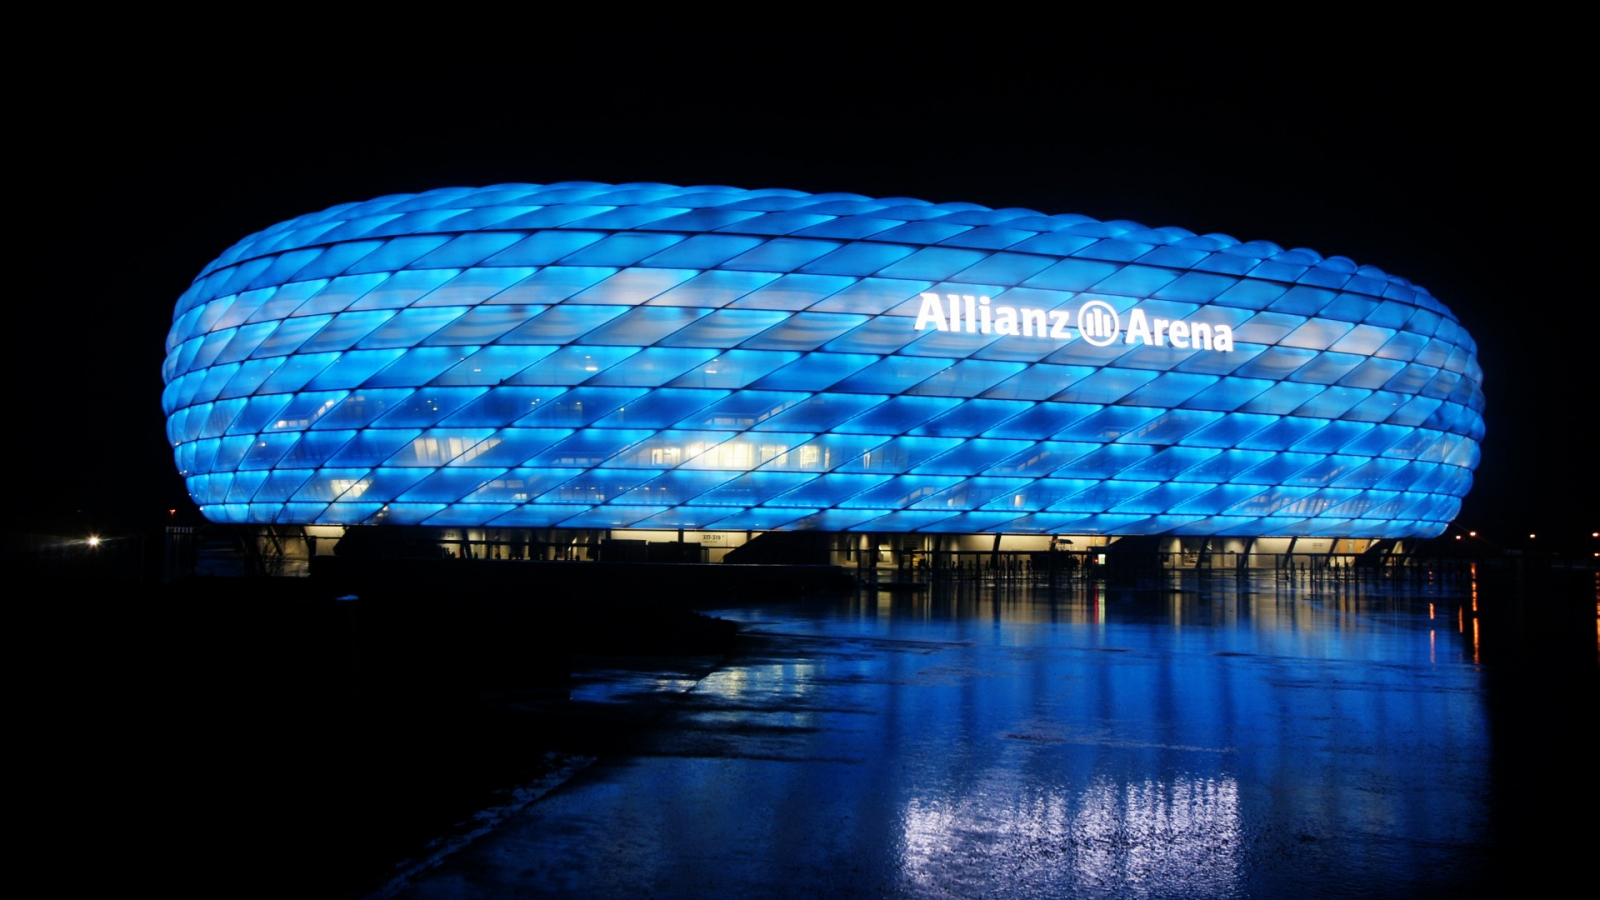 The Allianz Arena Munich for 1600 x 900 HDTV resolution